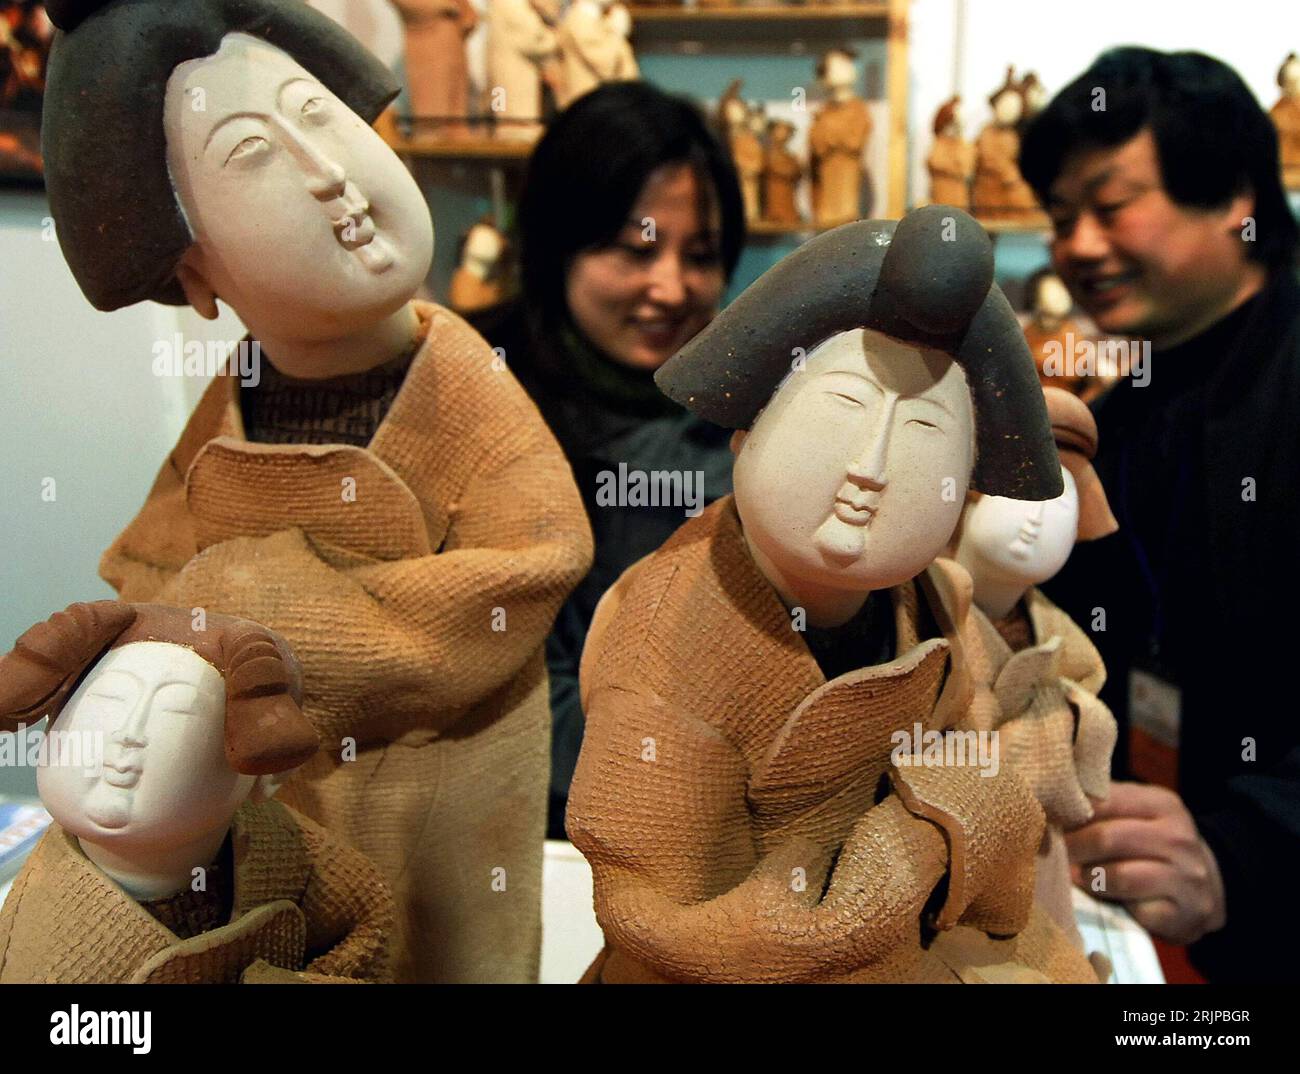 Keramik figur hi-res stock photography and images - Alamy